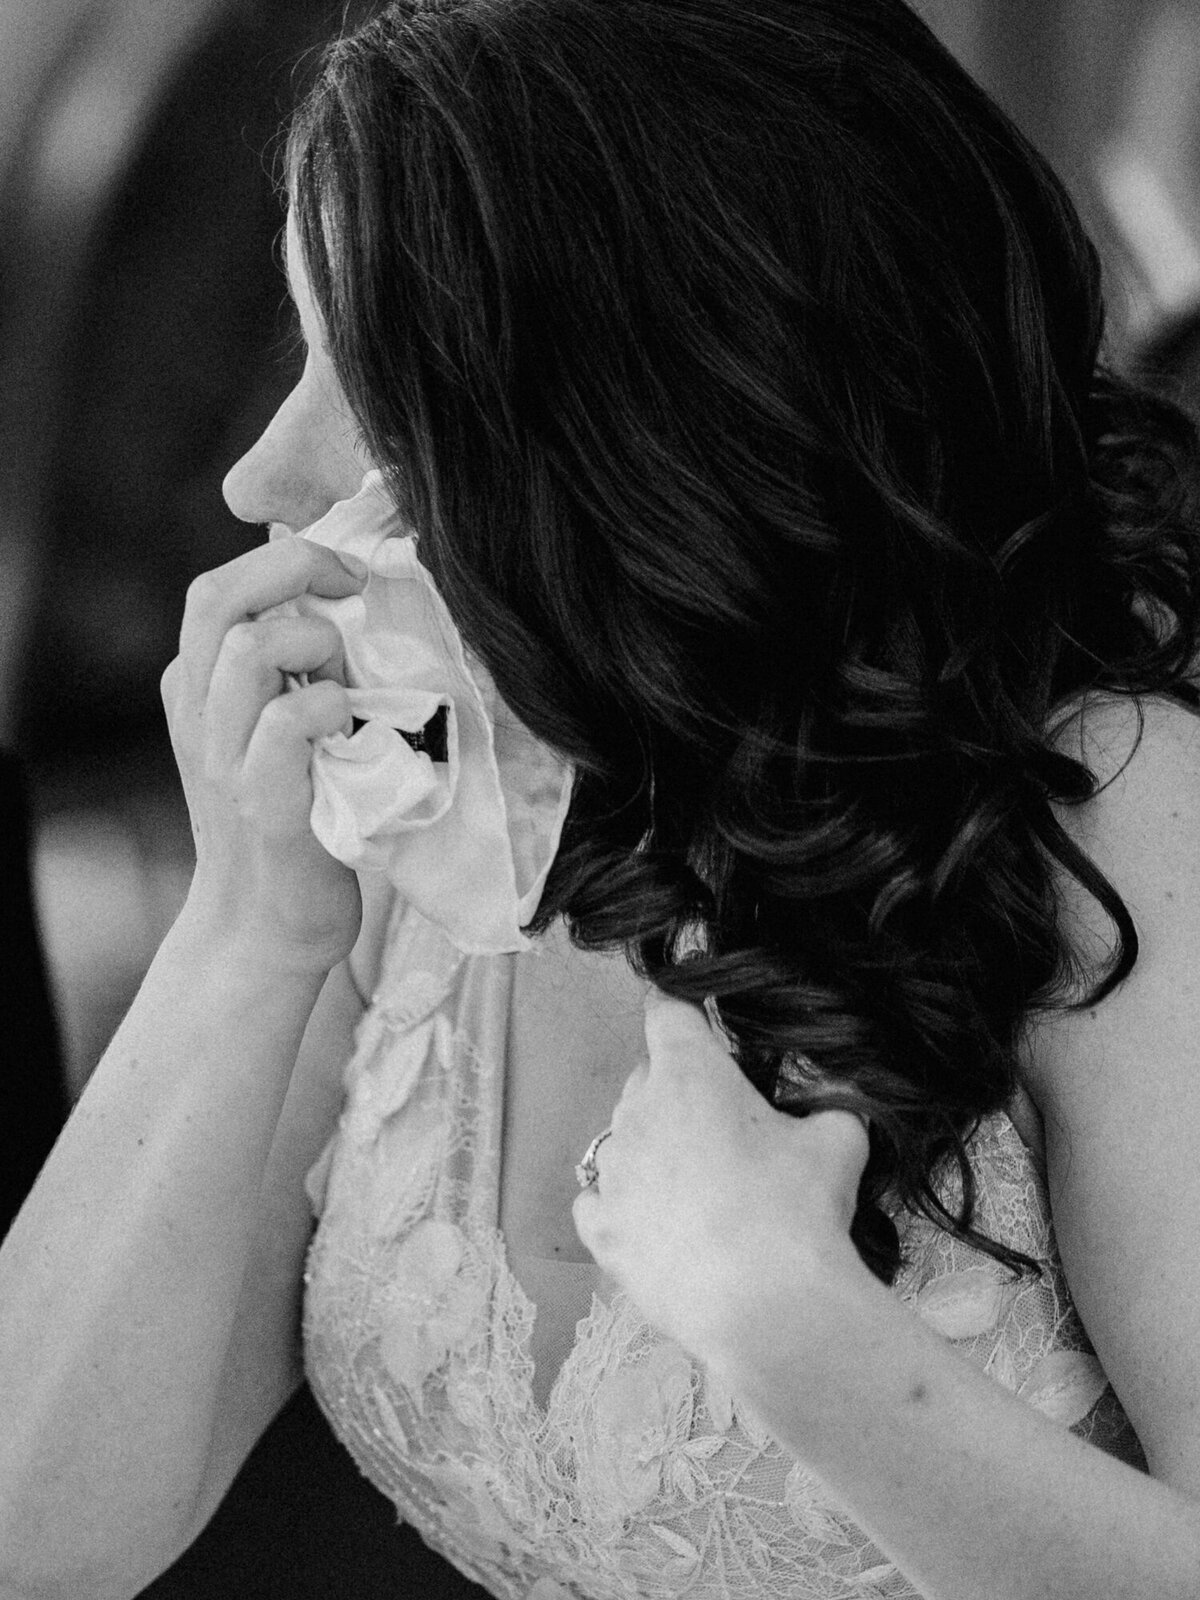 Bride sheds a tear during an emotional wedding reception toast